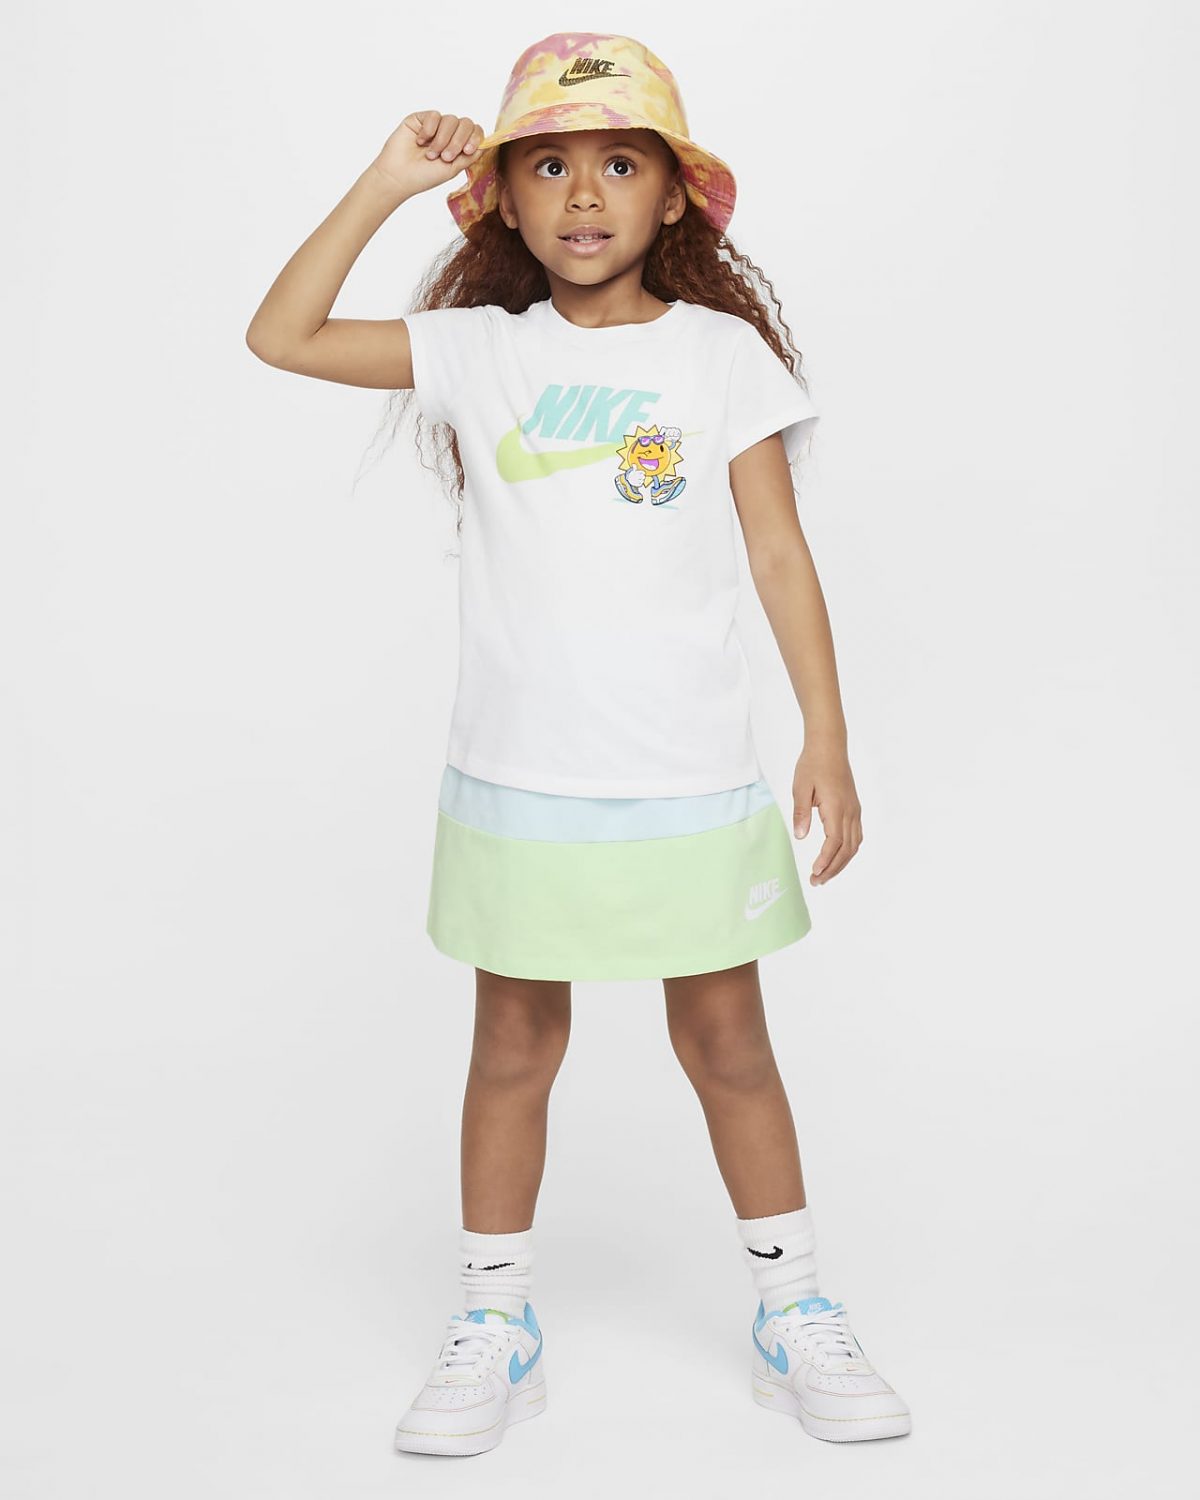 Детская футболка Nike фото